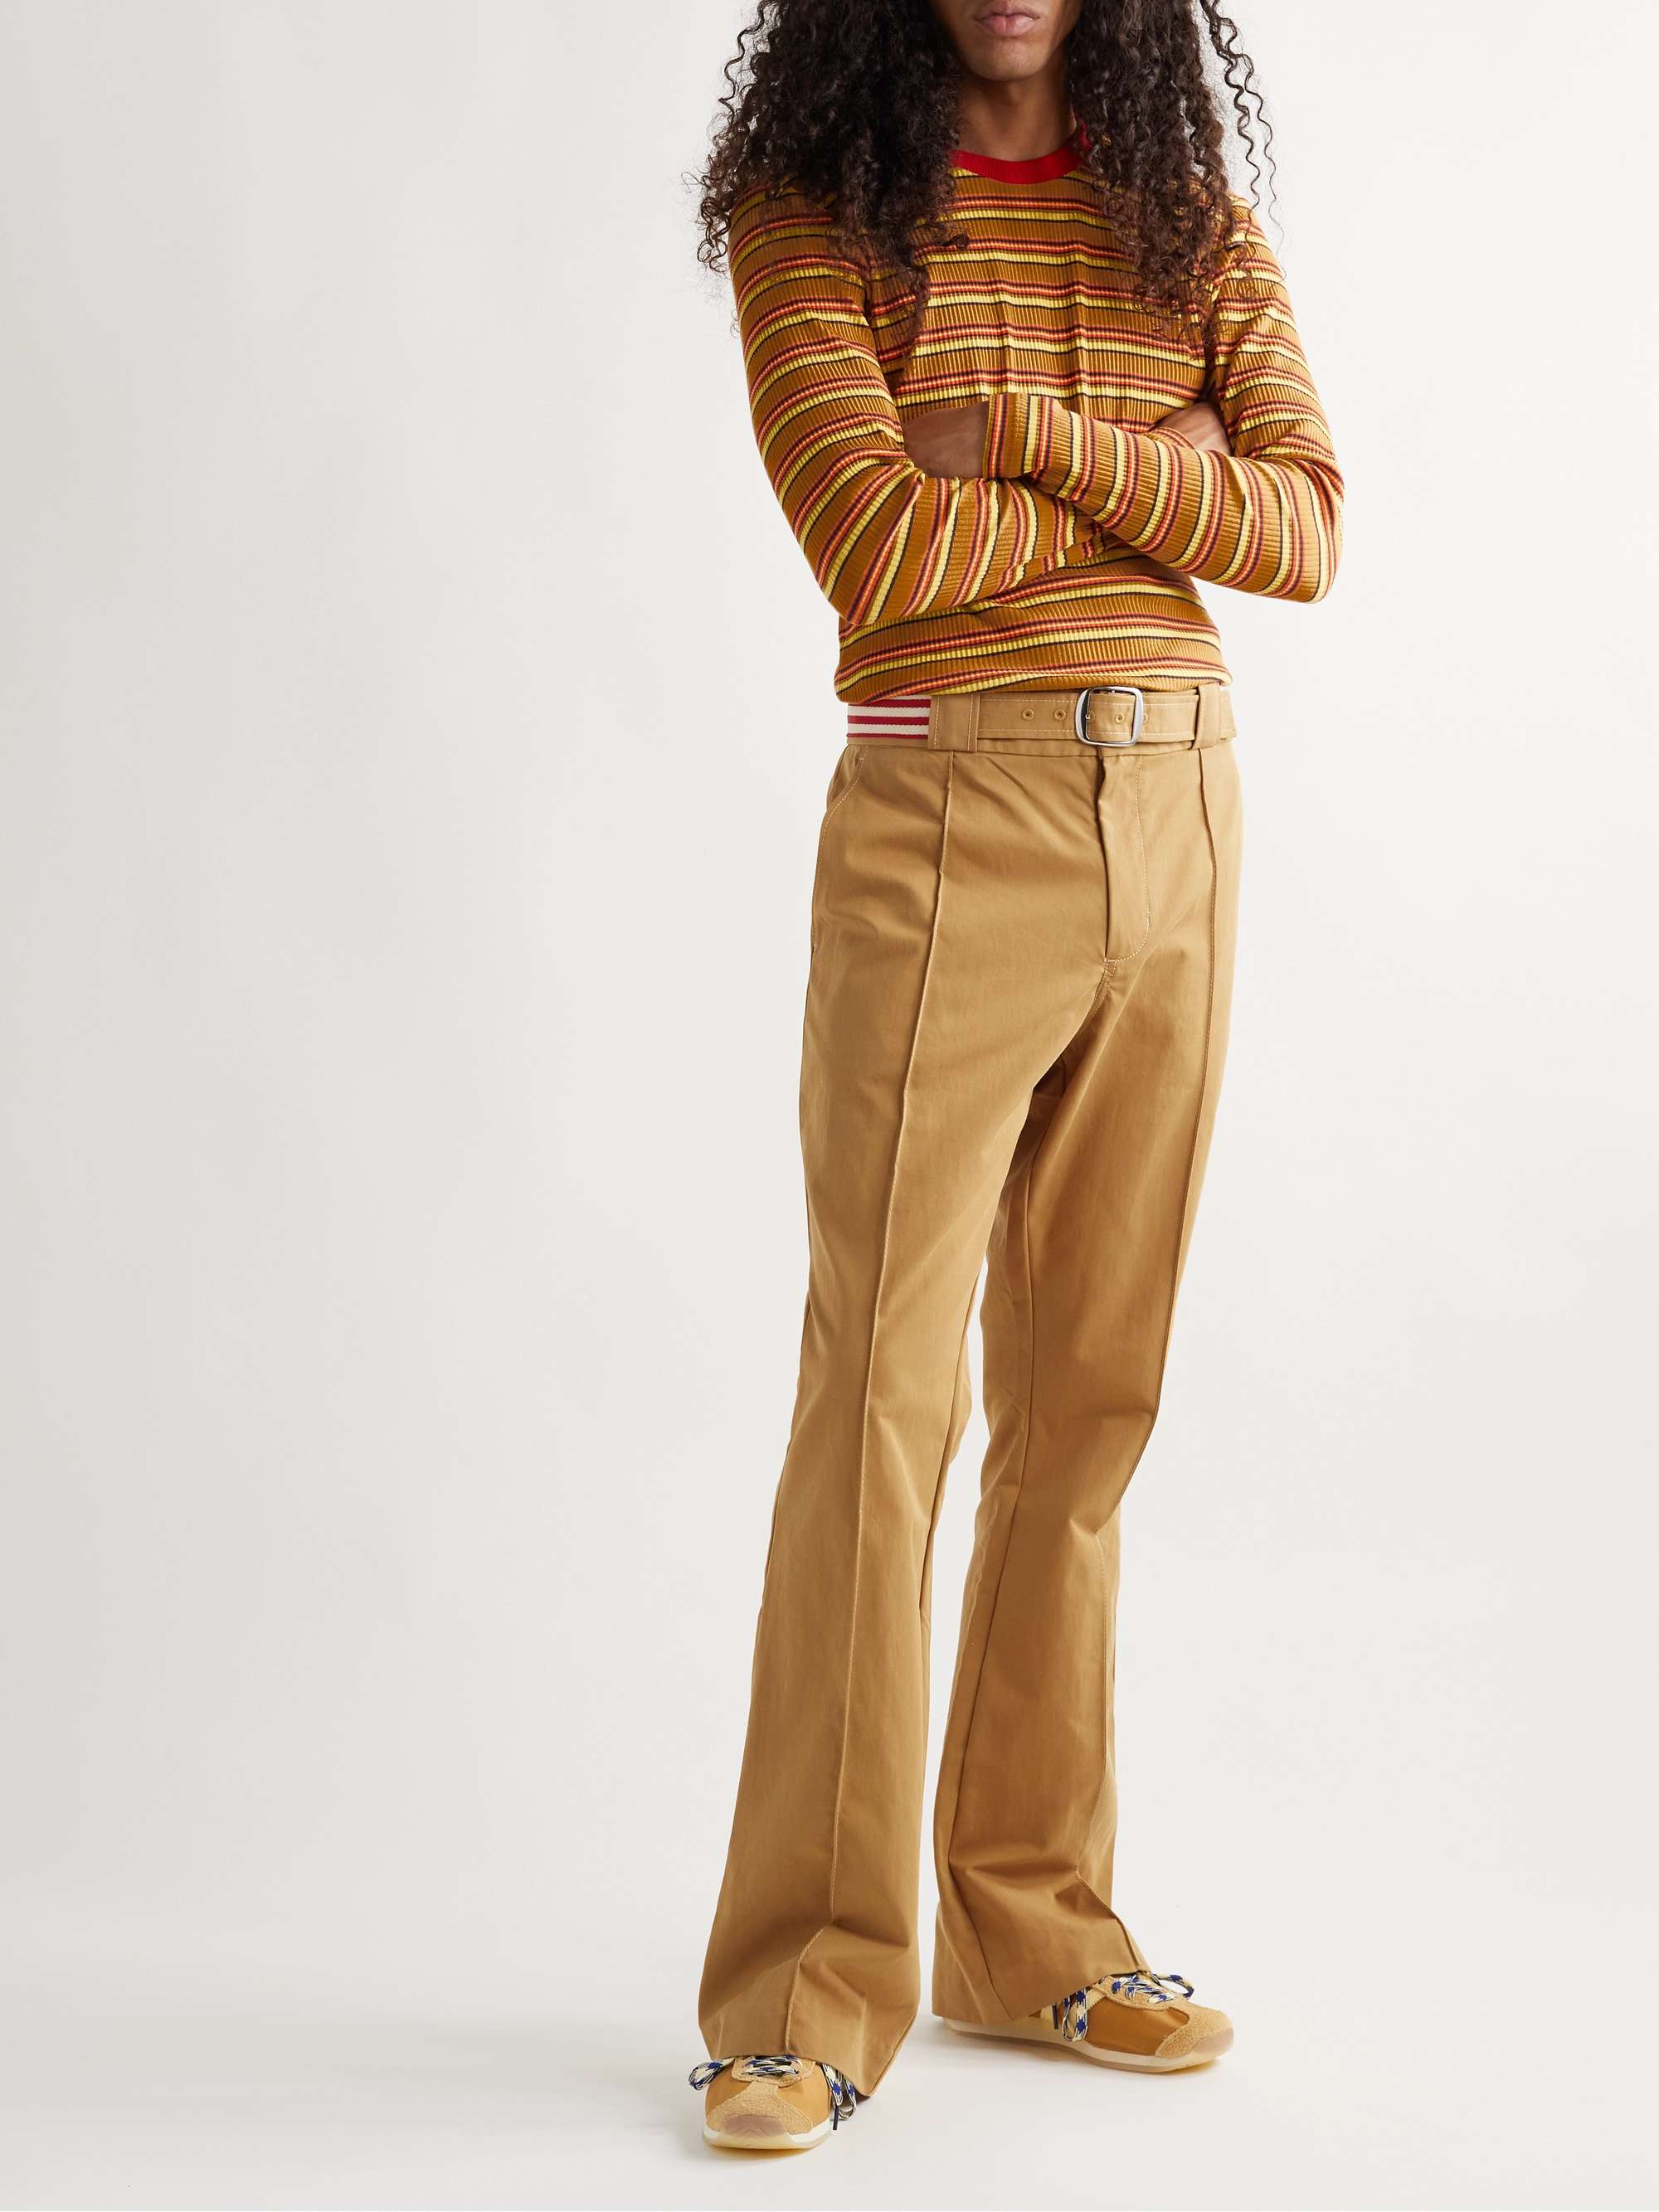 ADIDAS CONSORTIUM + Wales Bonner Slim-Fit Striped Ribbed Cotton-Blend T-Shirt